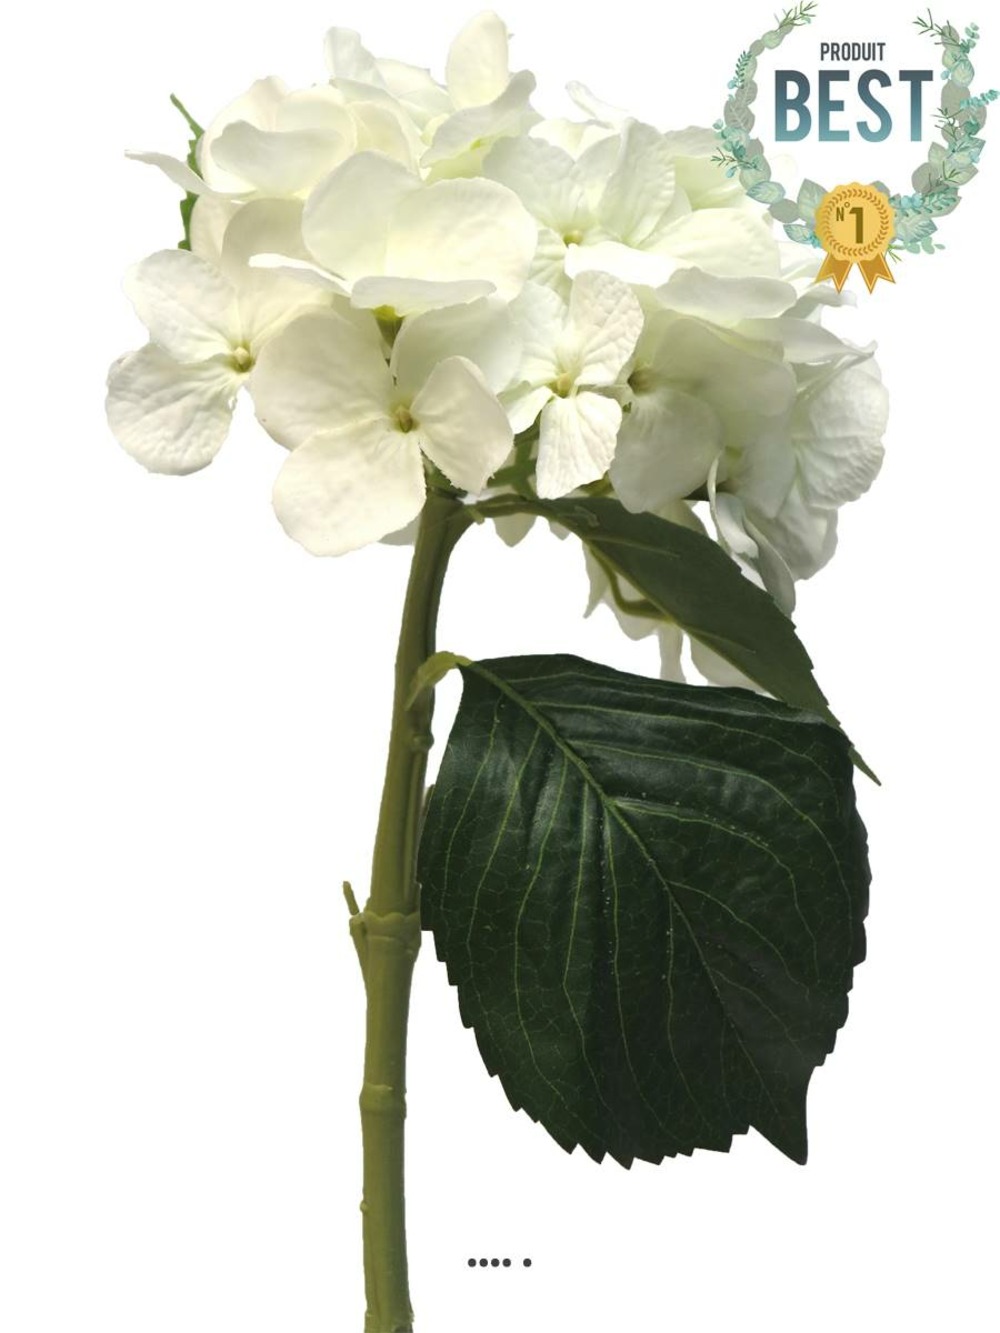 Hortensia artificiel en branche, h 48 cm blanc neige - best - couleur: blanc nei